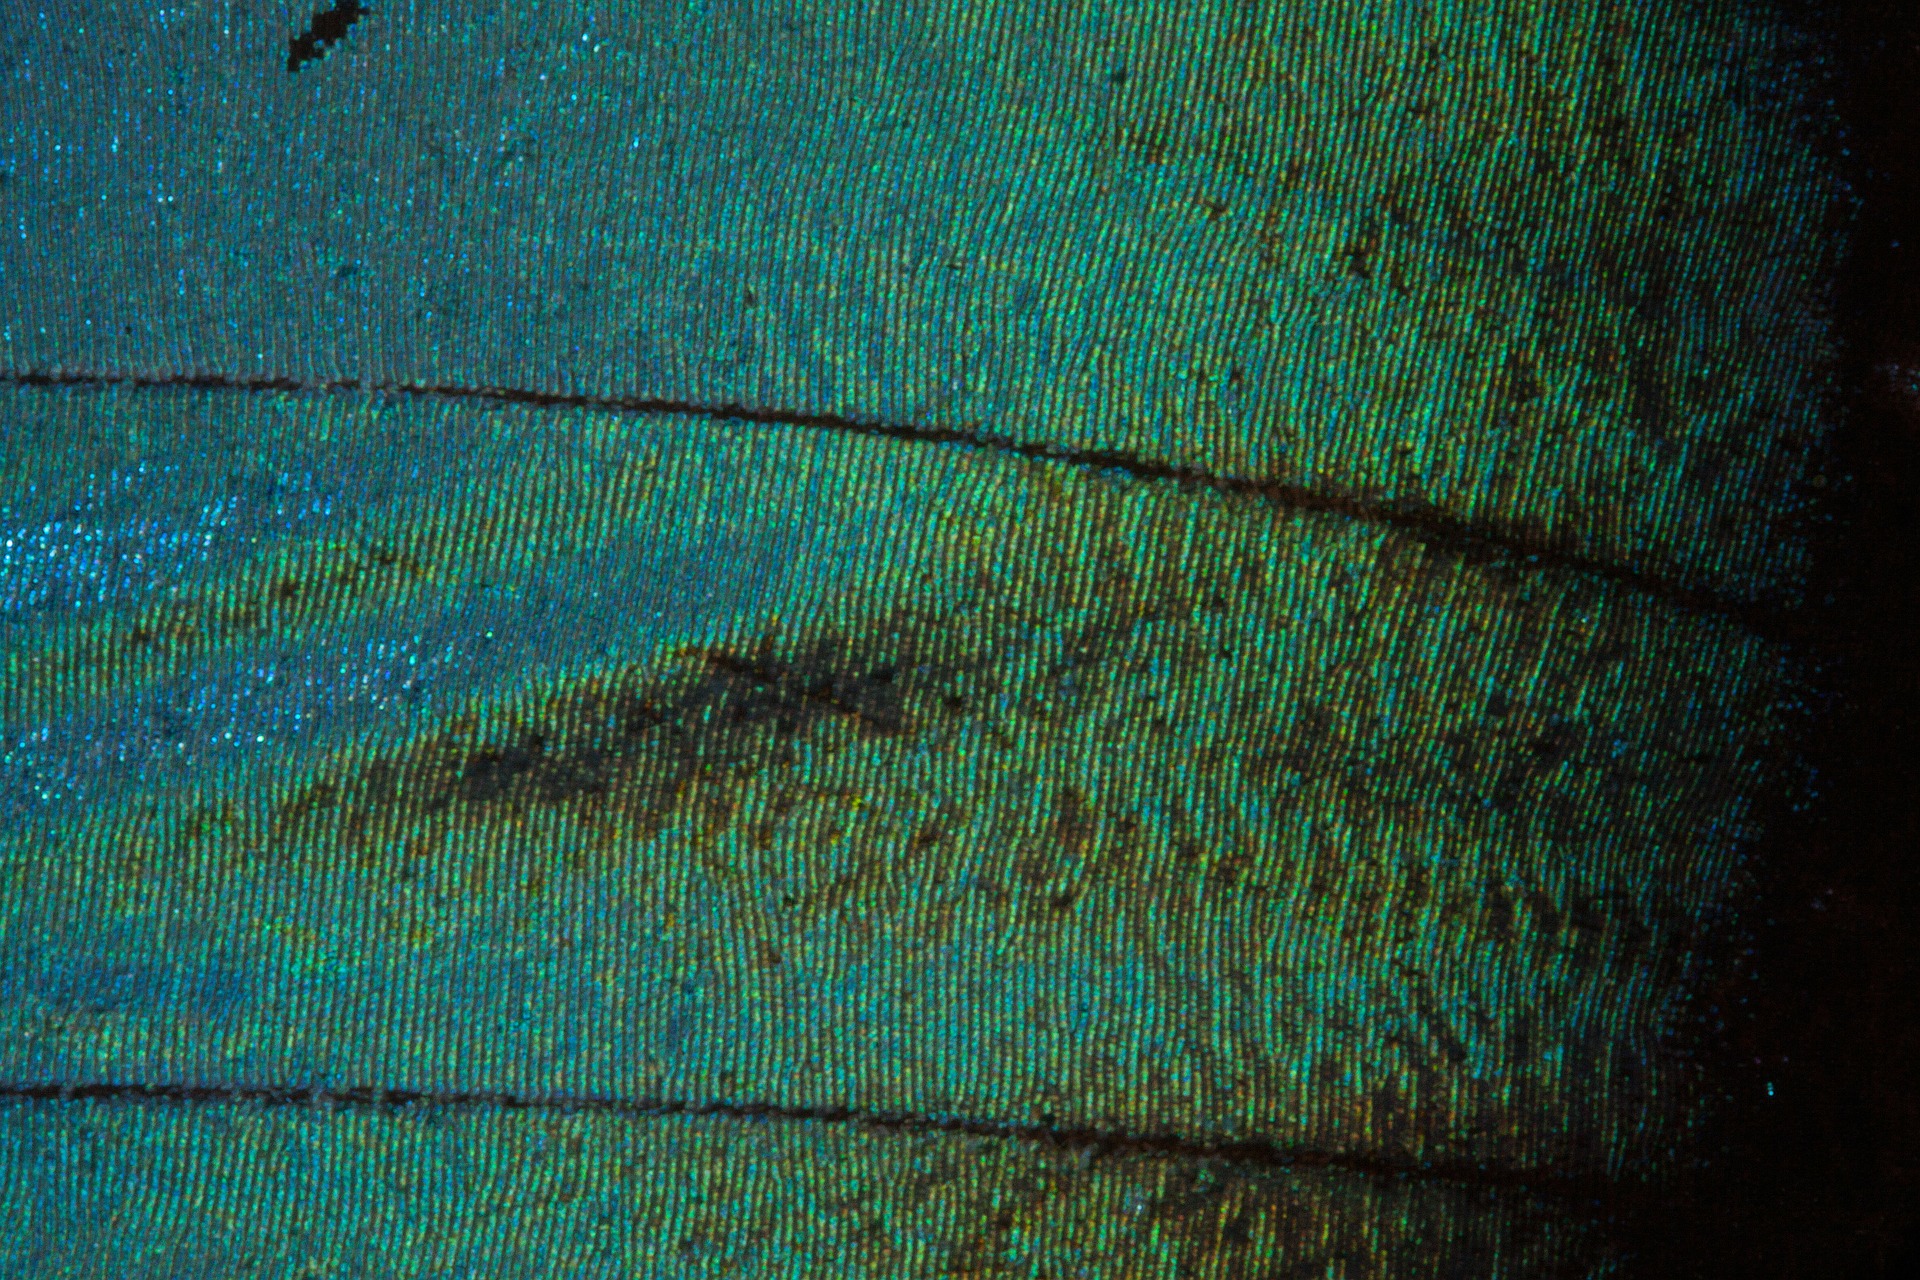 Butterfly pattern photo